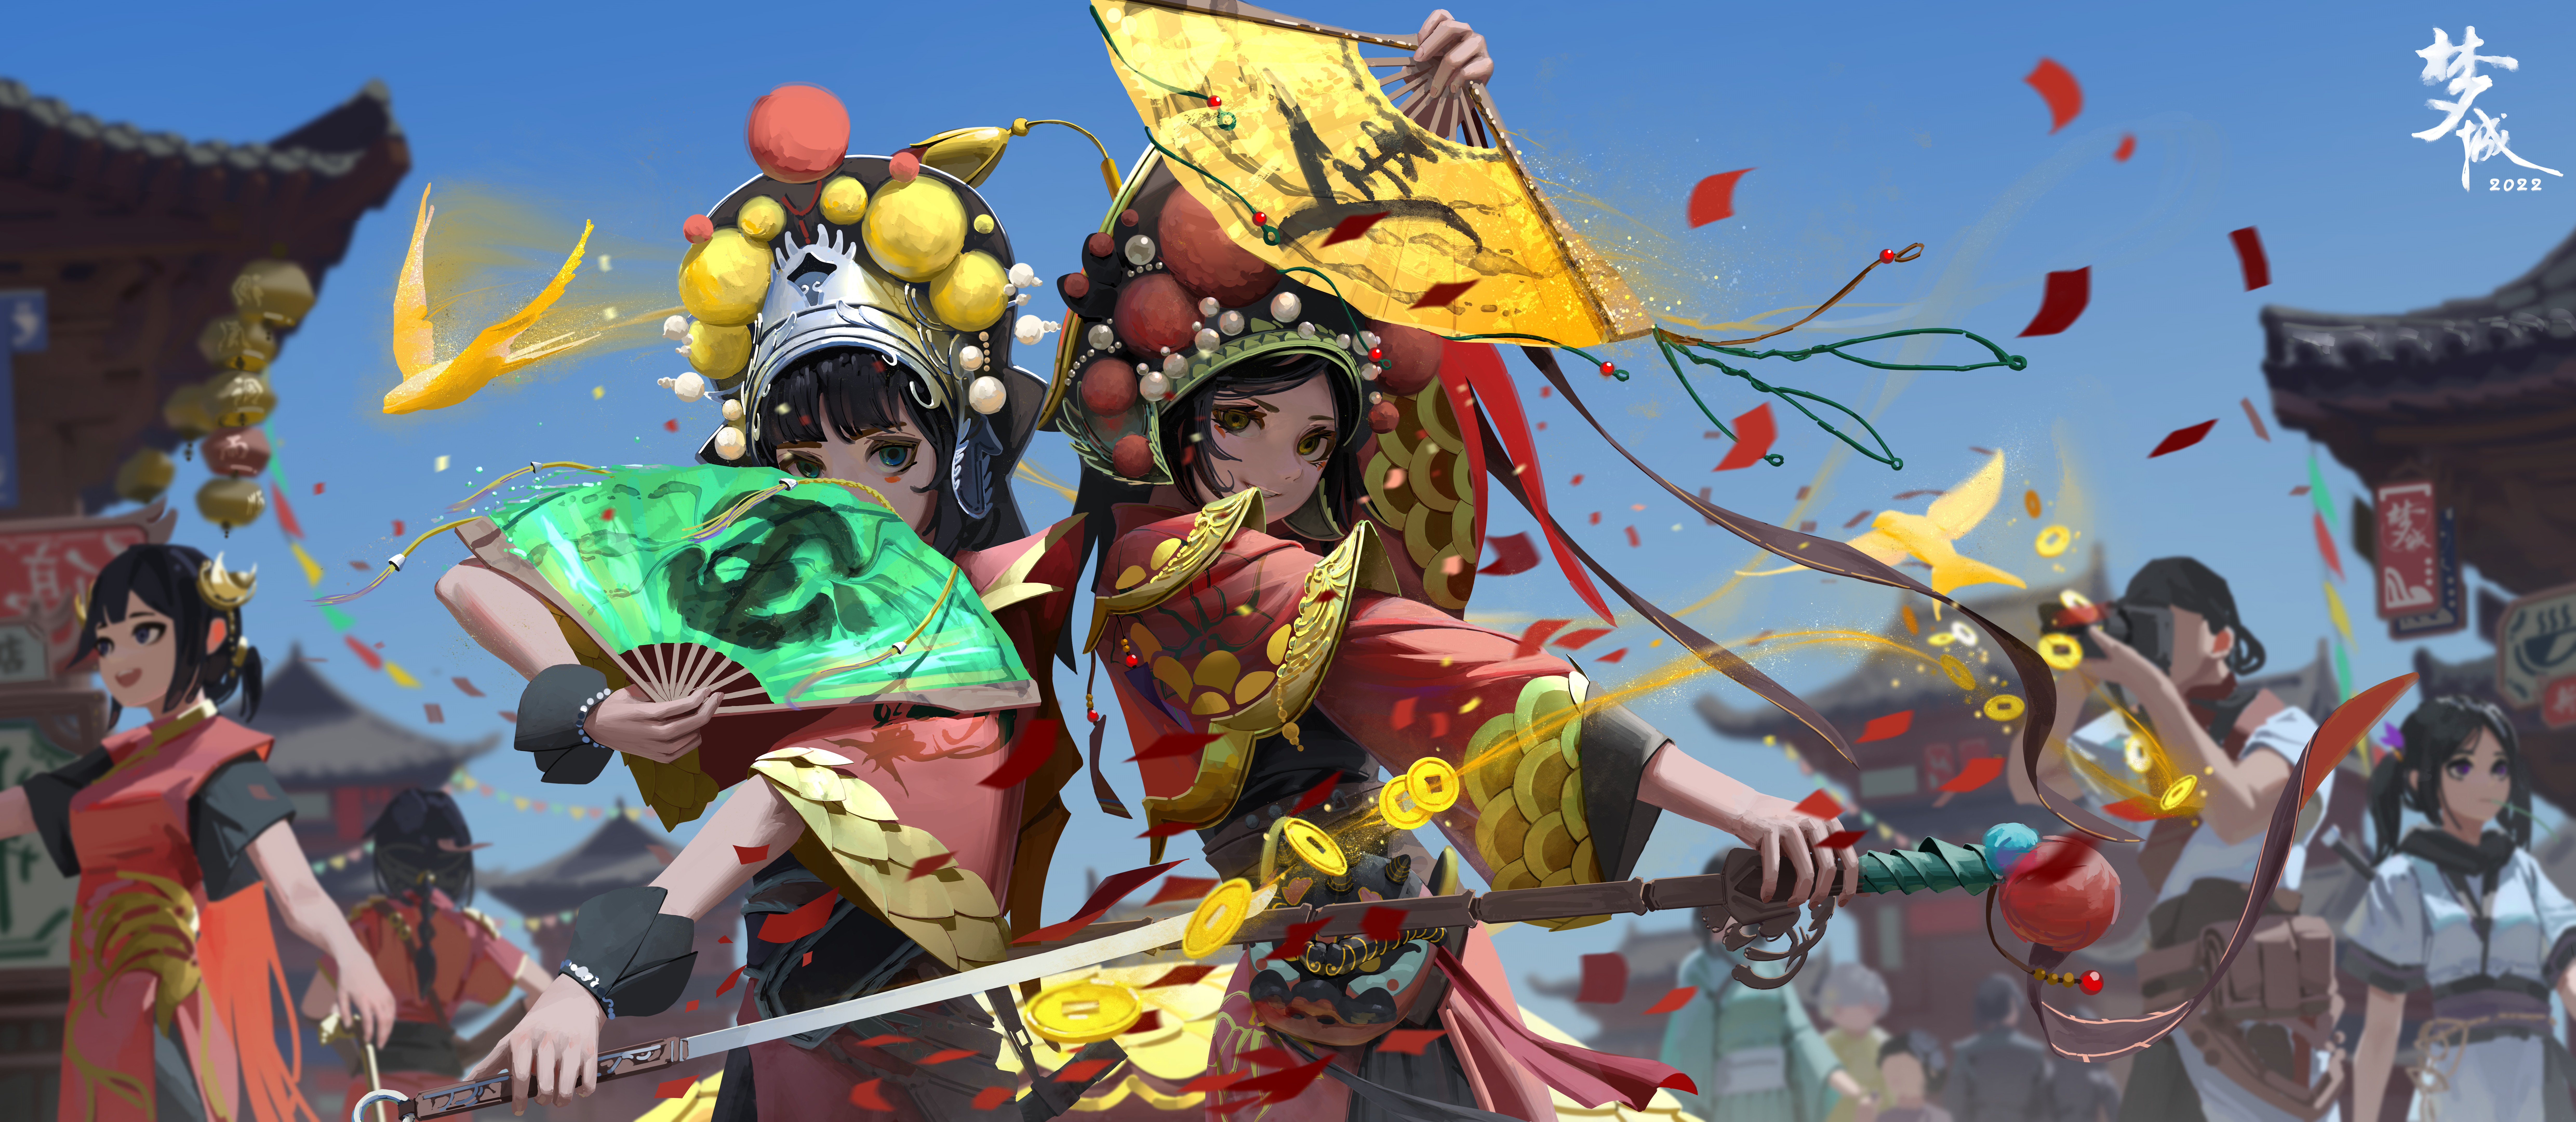 Anime 9918x4320 fans artwork Star pigeon two women women with swords girls with guns fantasy art fantasy girl